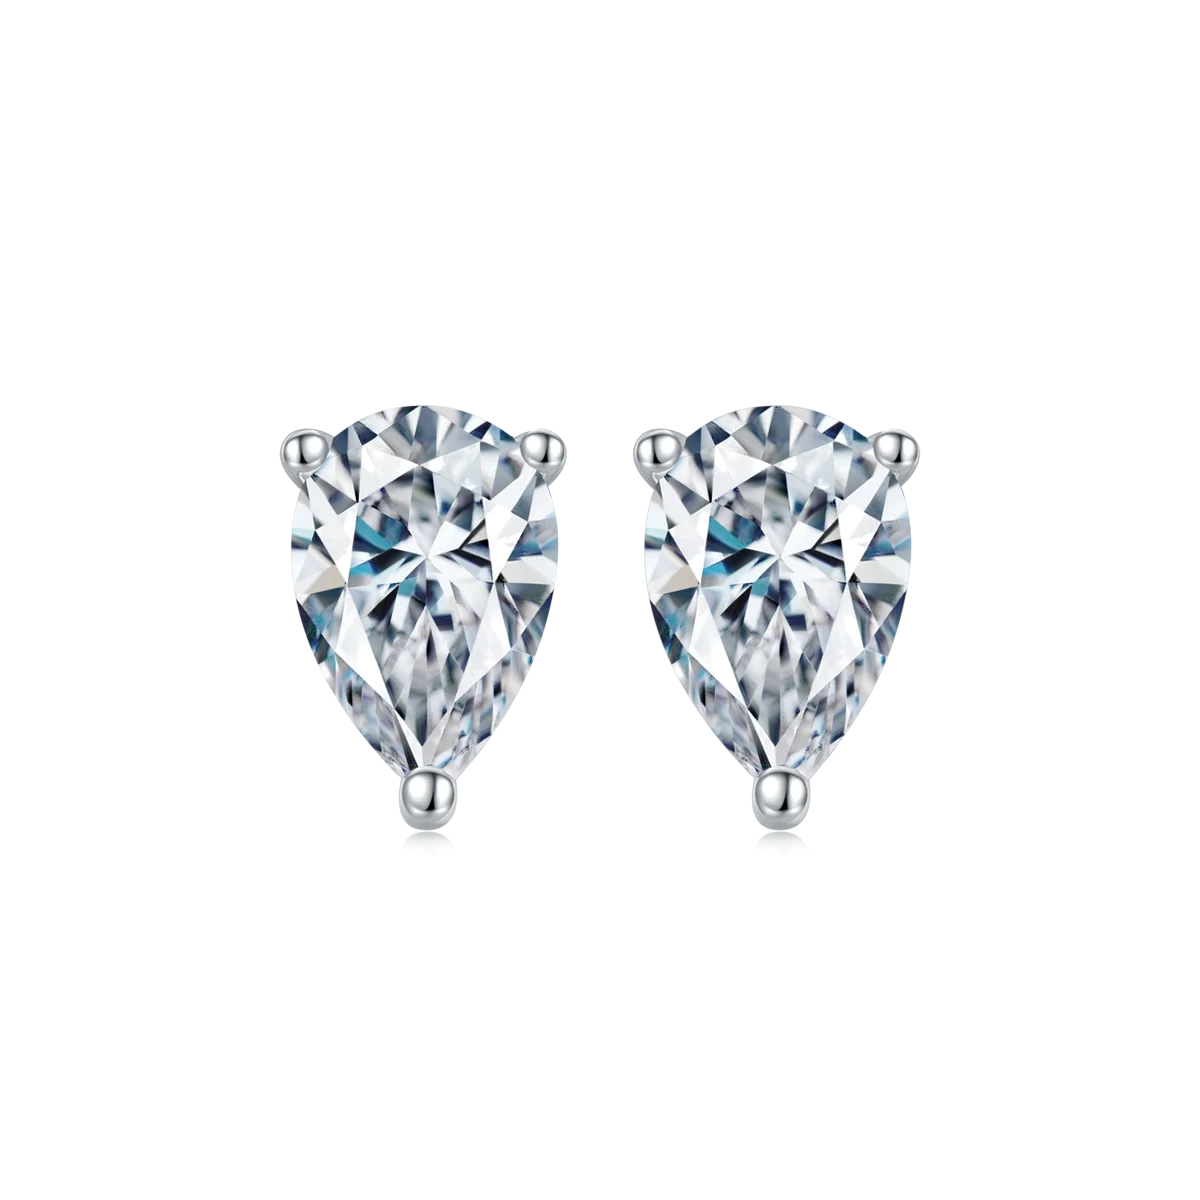 

Silver 925 Original Diamond Test Past Brilliant Cut Total 1 Carat D Color Water Drop Moissanite Stud Earrings Gemstone Jewelry